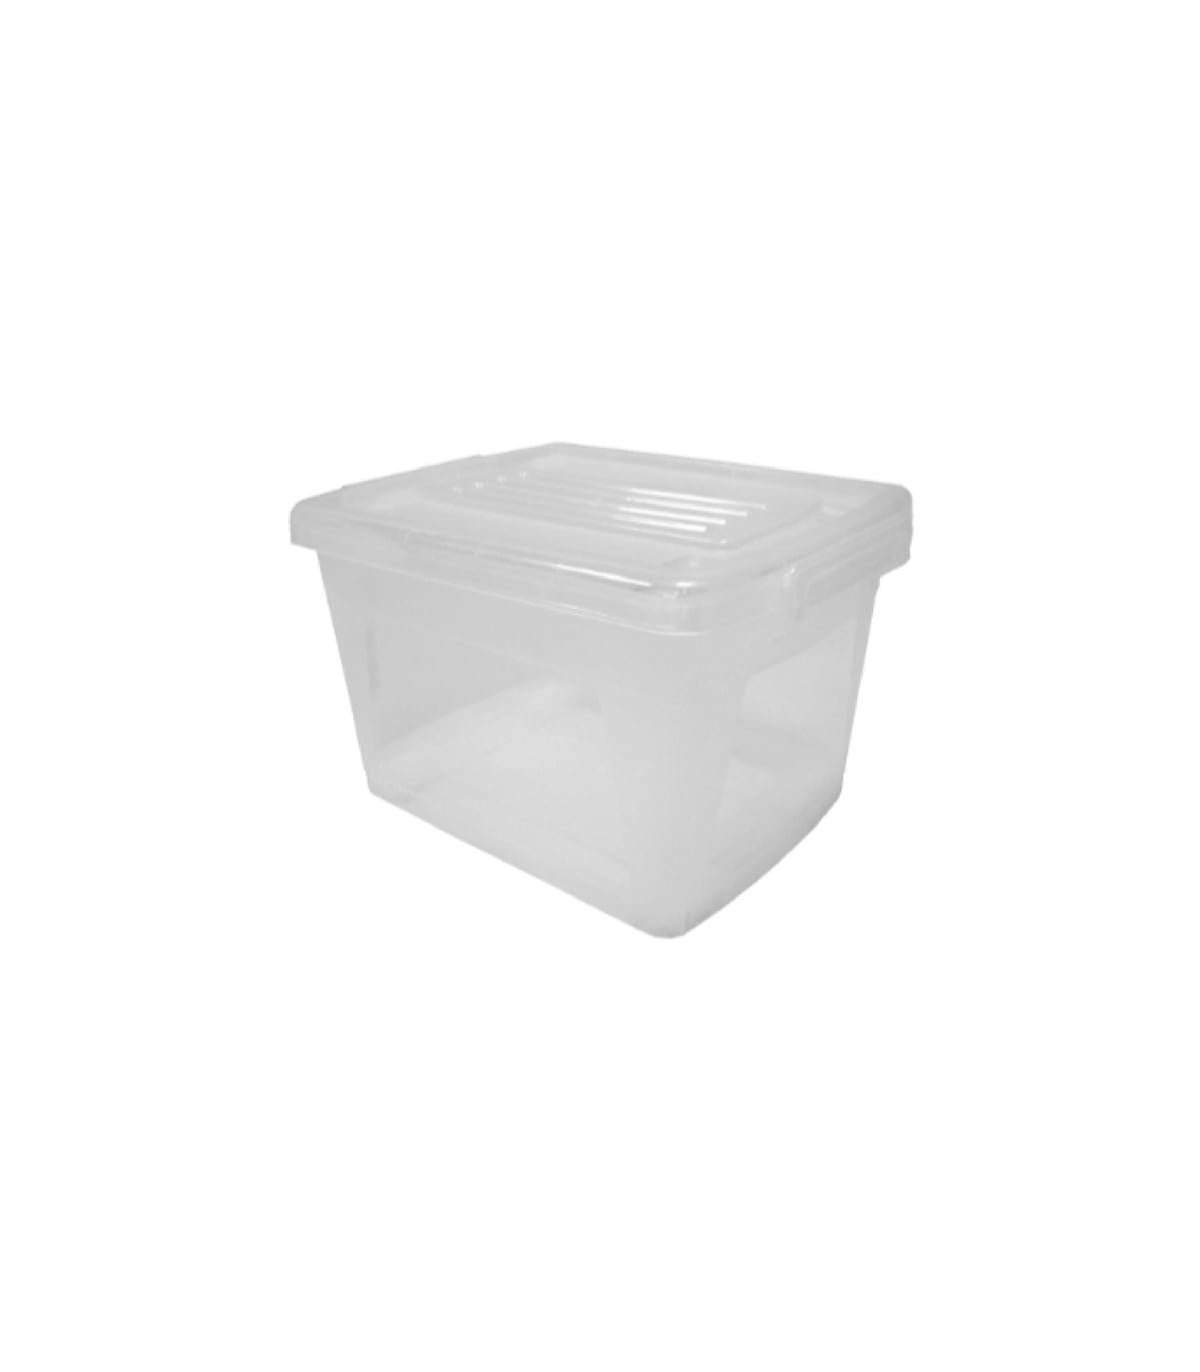 Caixa arrumação plástico Preta 60Lt - IKP60 - S411